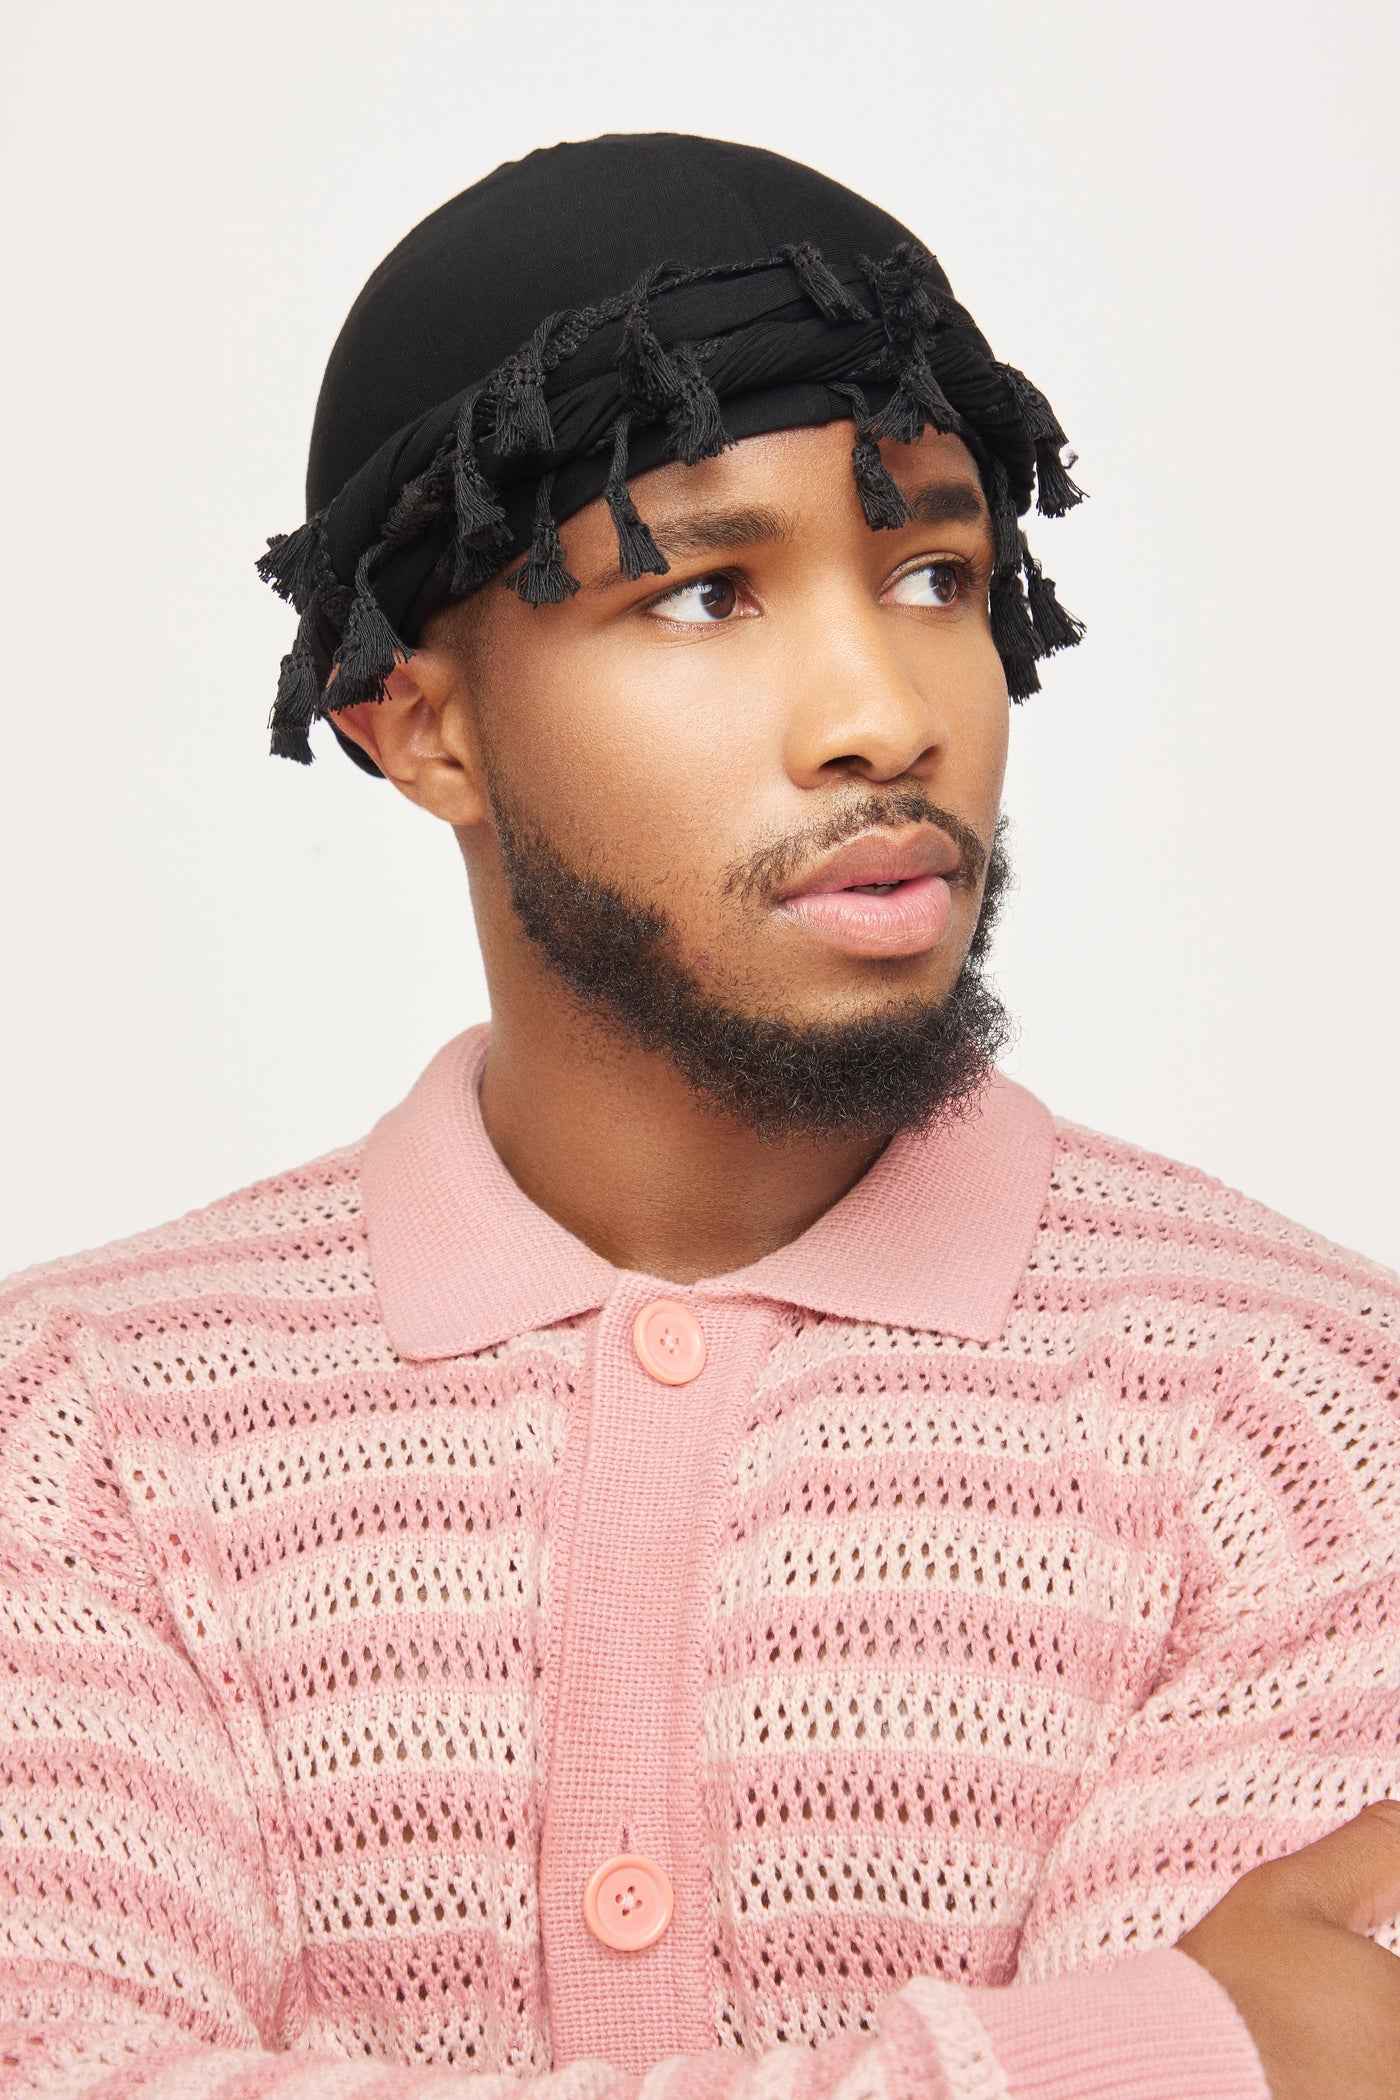 Pink Striped Male Turban